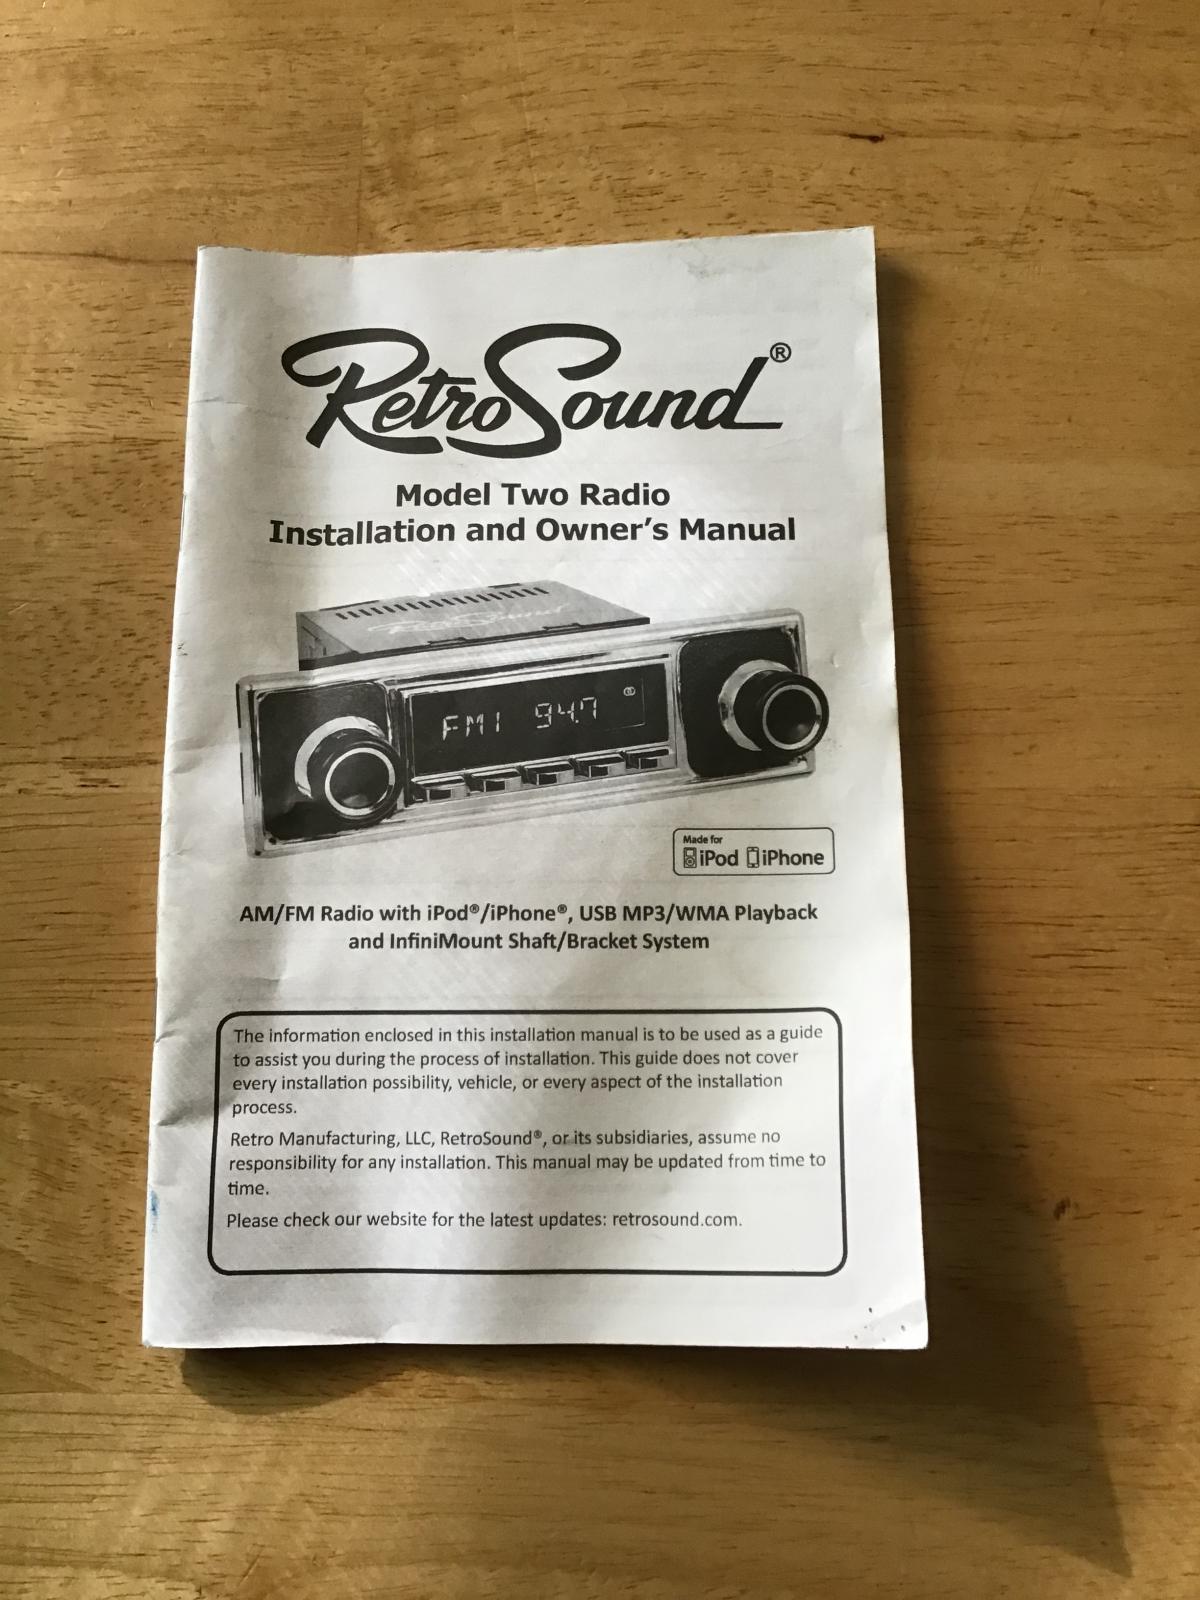 RetroSound. Modern Sound for Your Classic. – Retro Manufacturing